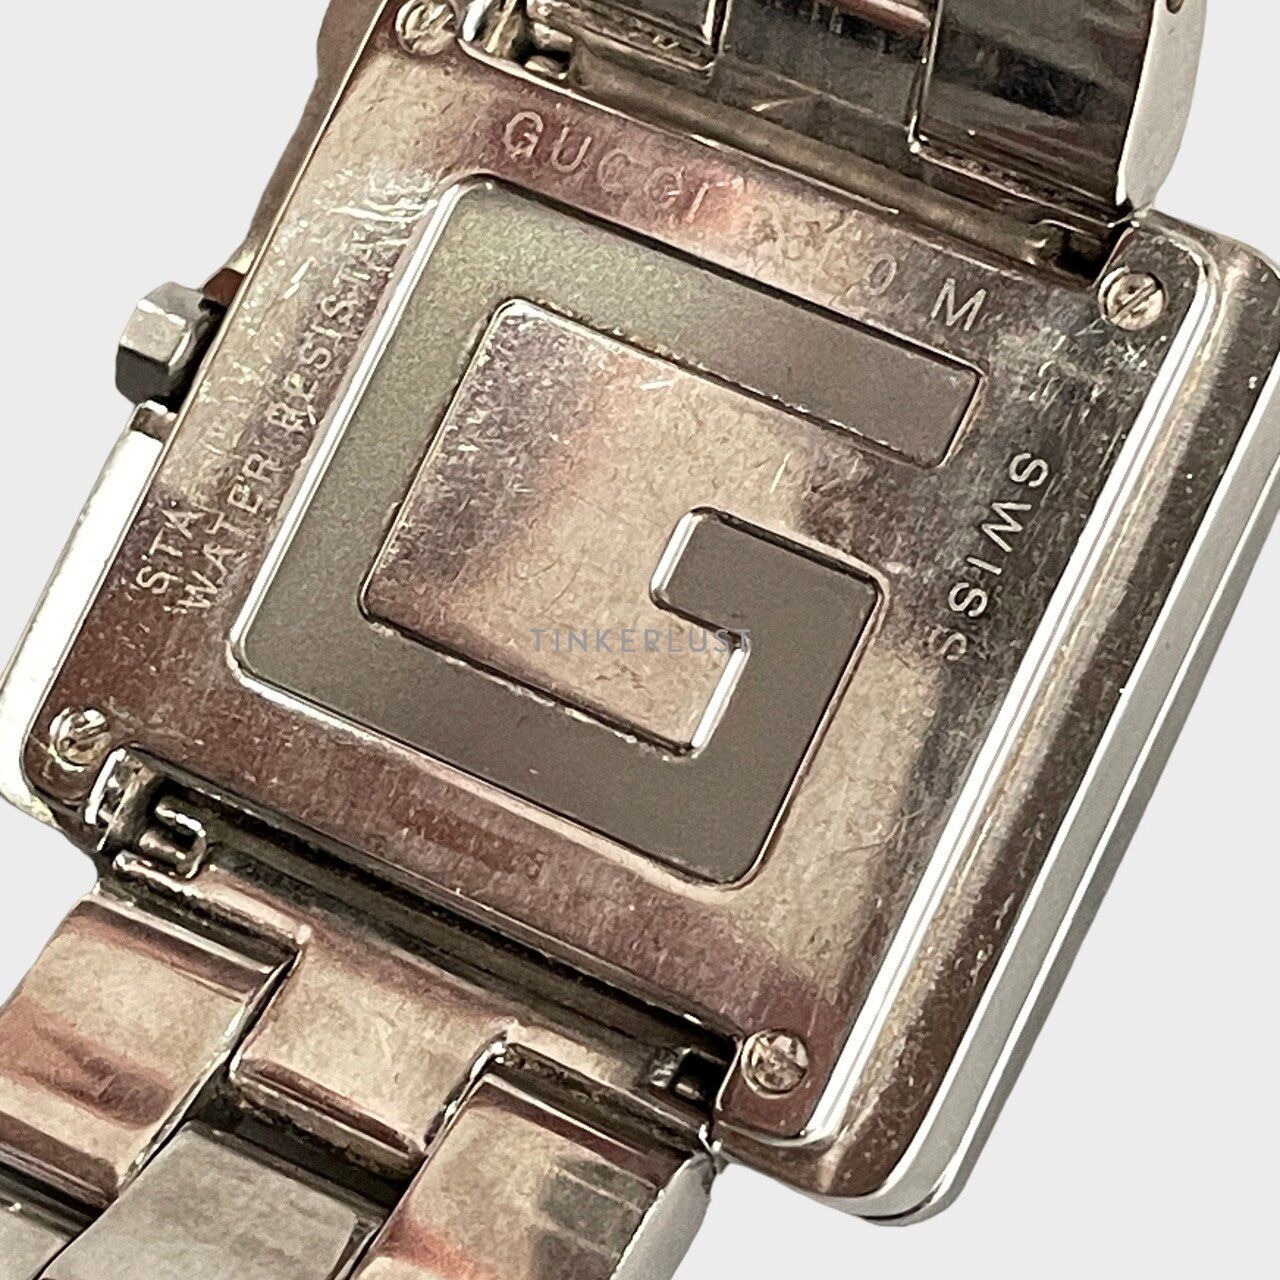 Gucci G Silver Watch